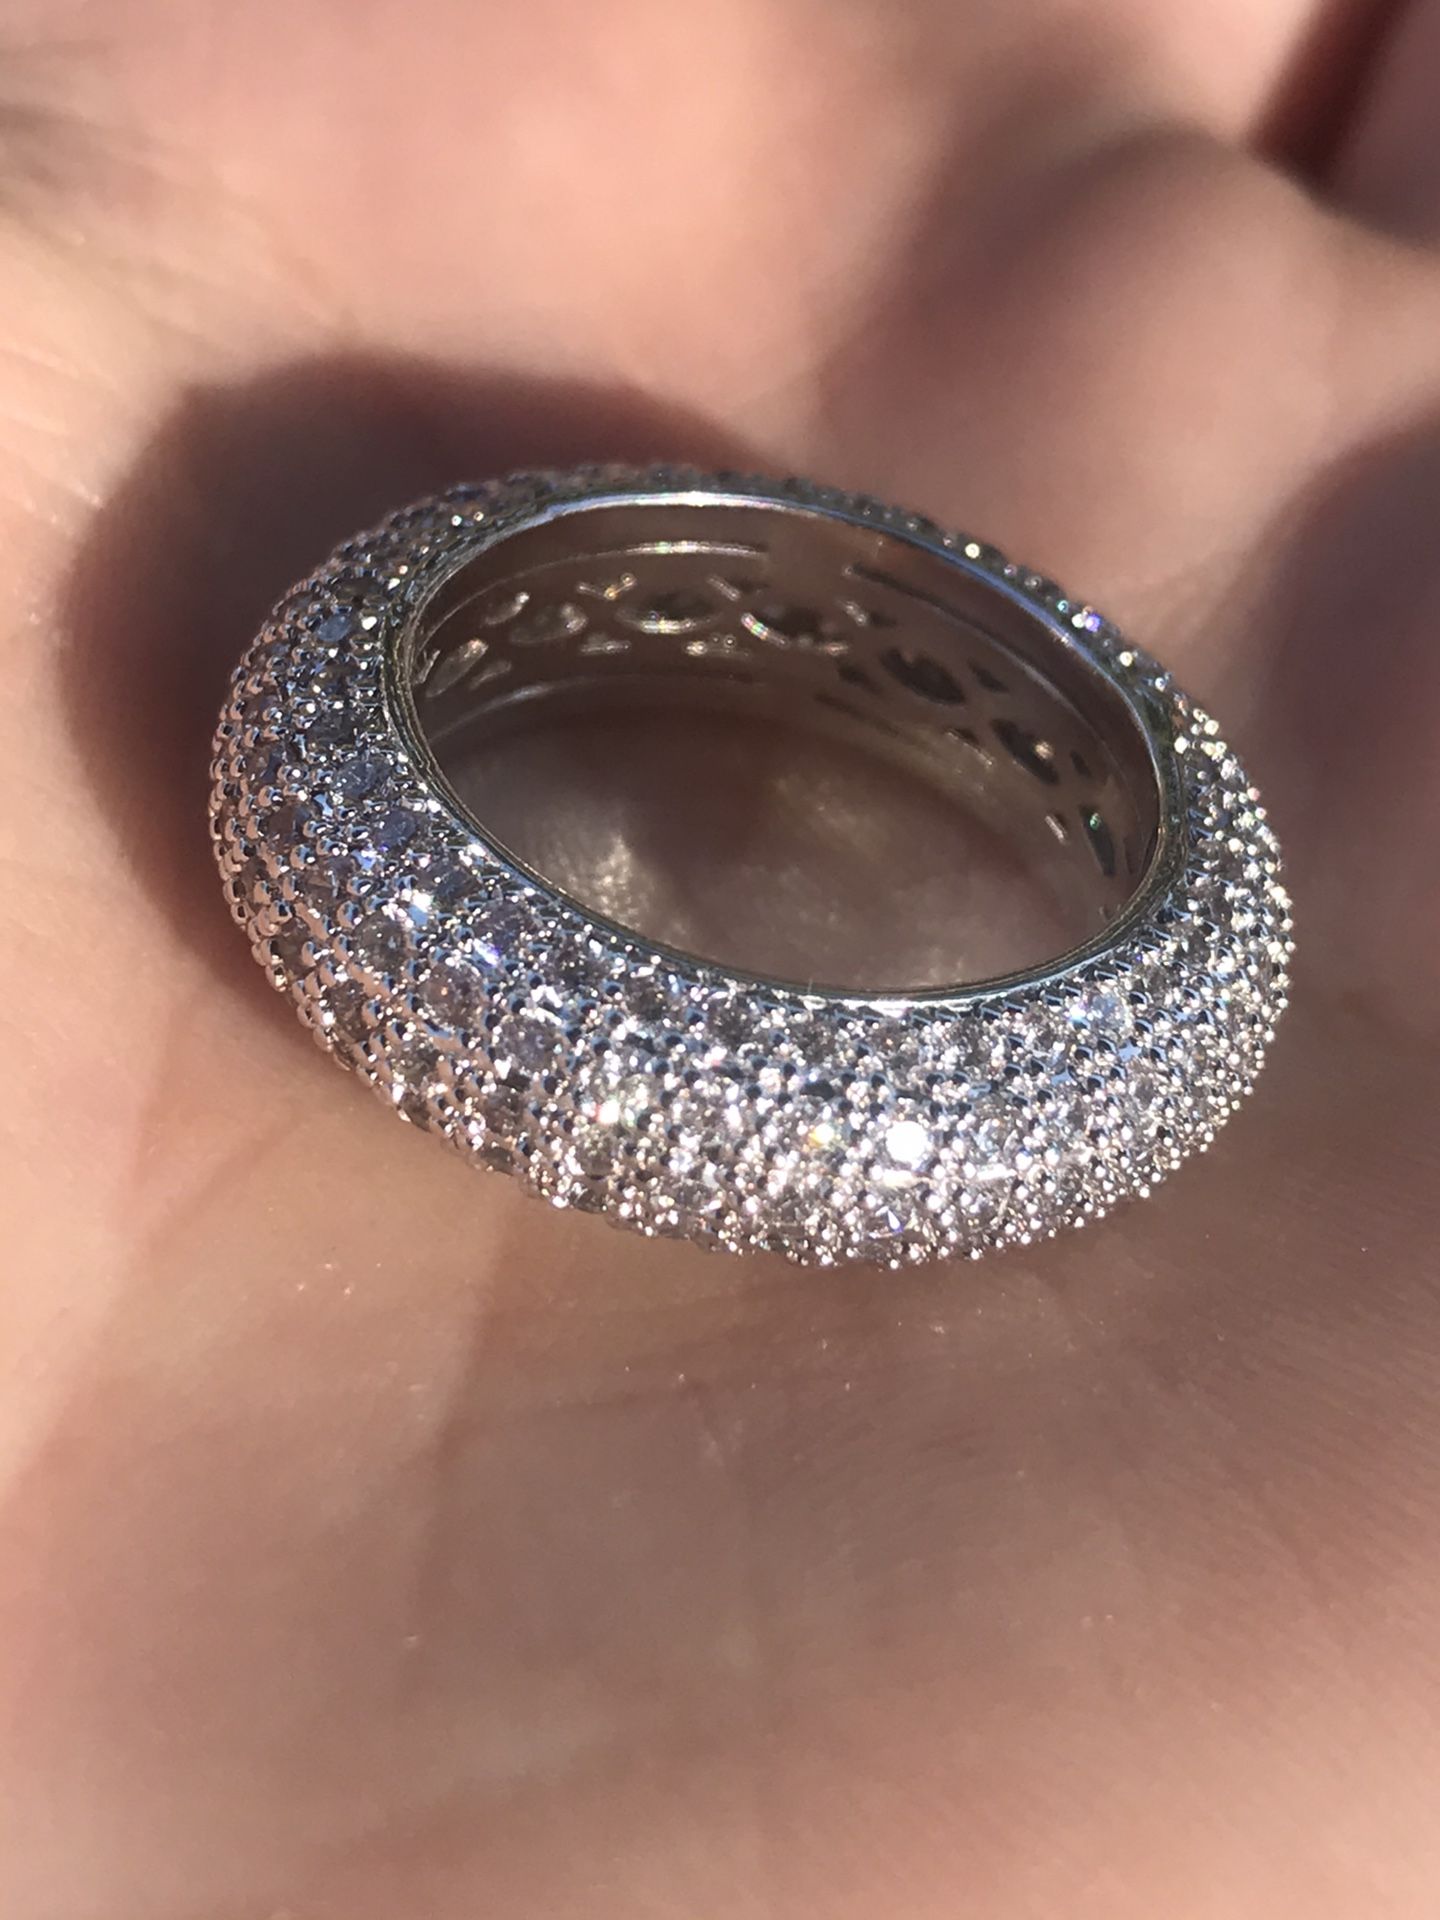 New 18K white gold filled man / woman wedding band ring size 7